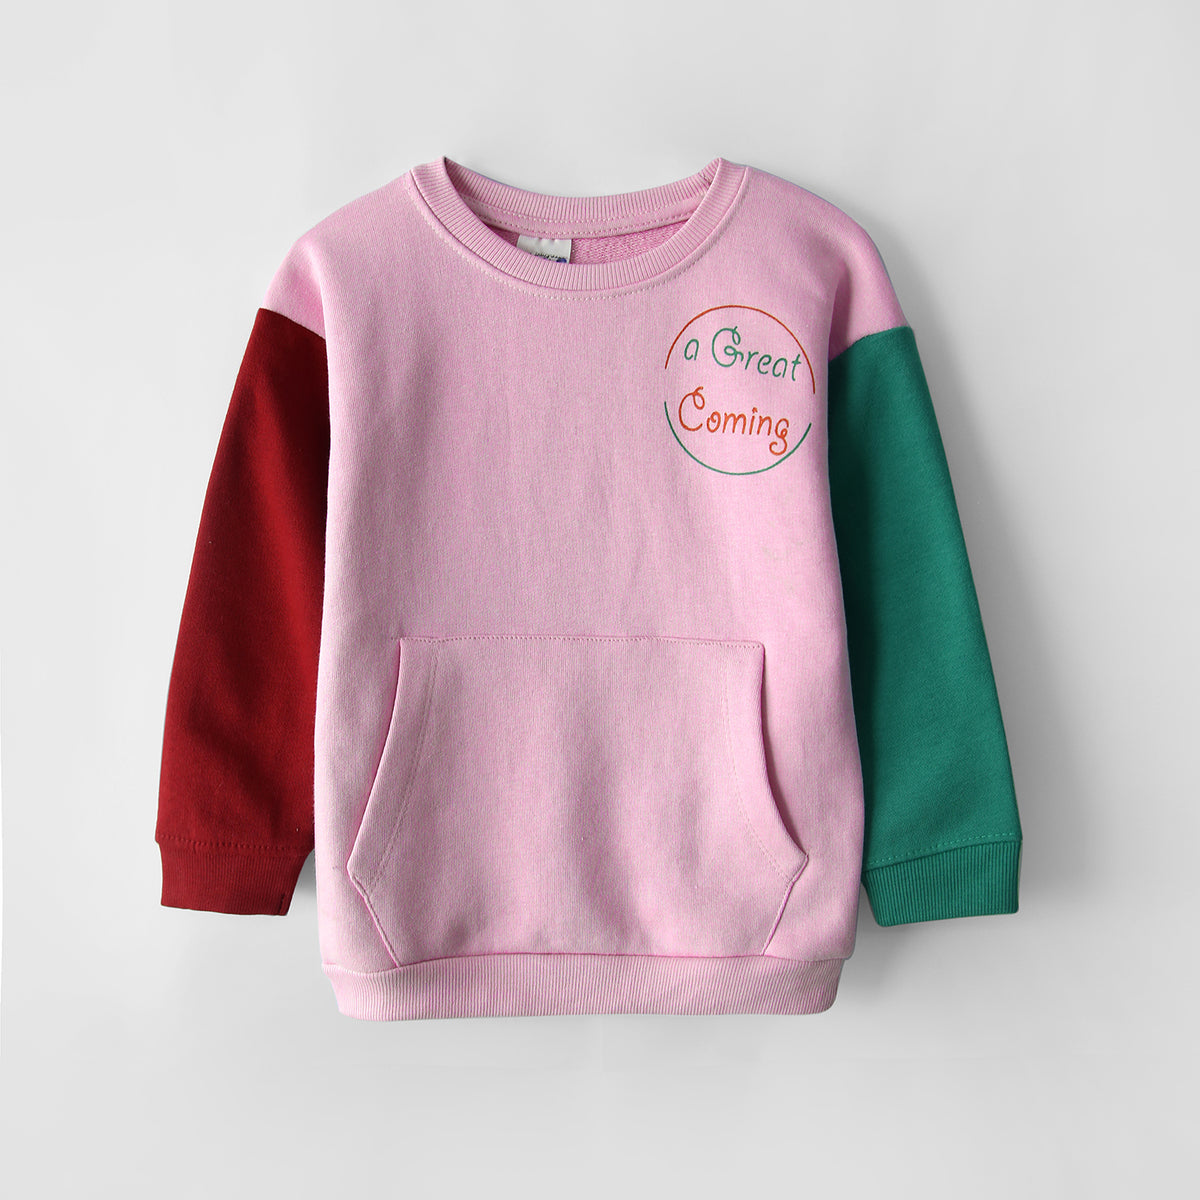 Premium Quality Printed Fleece Sweatshirt For Girls